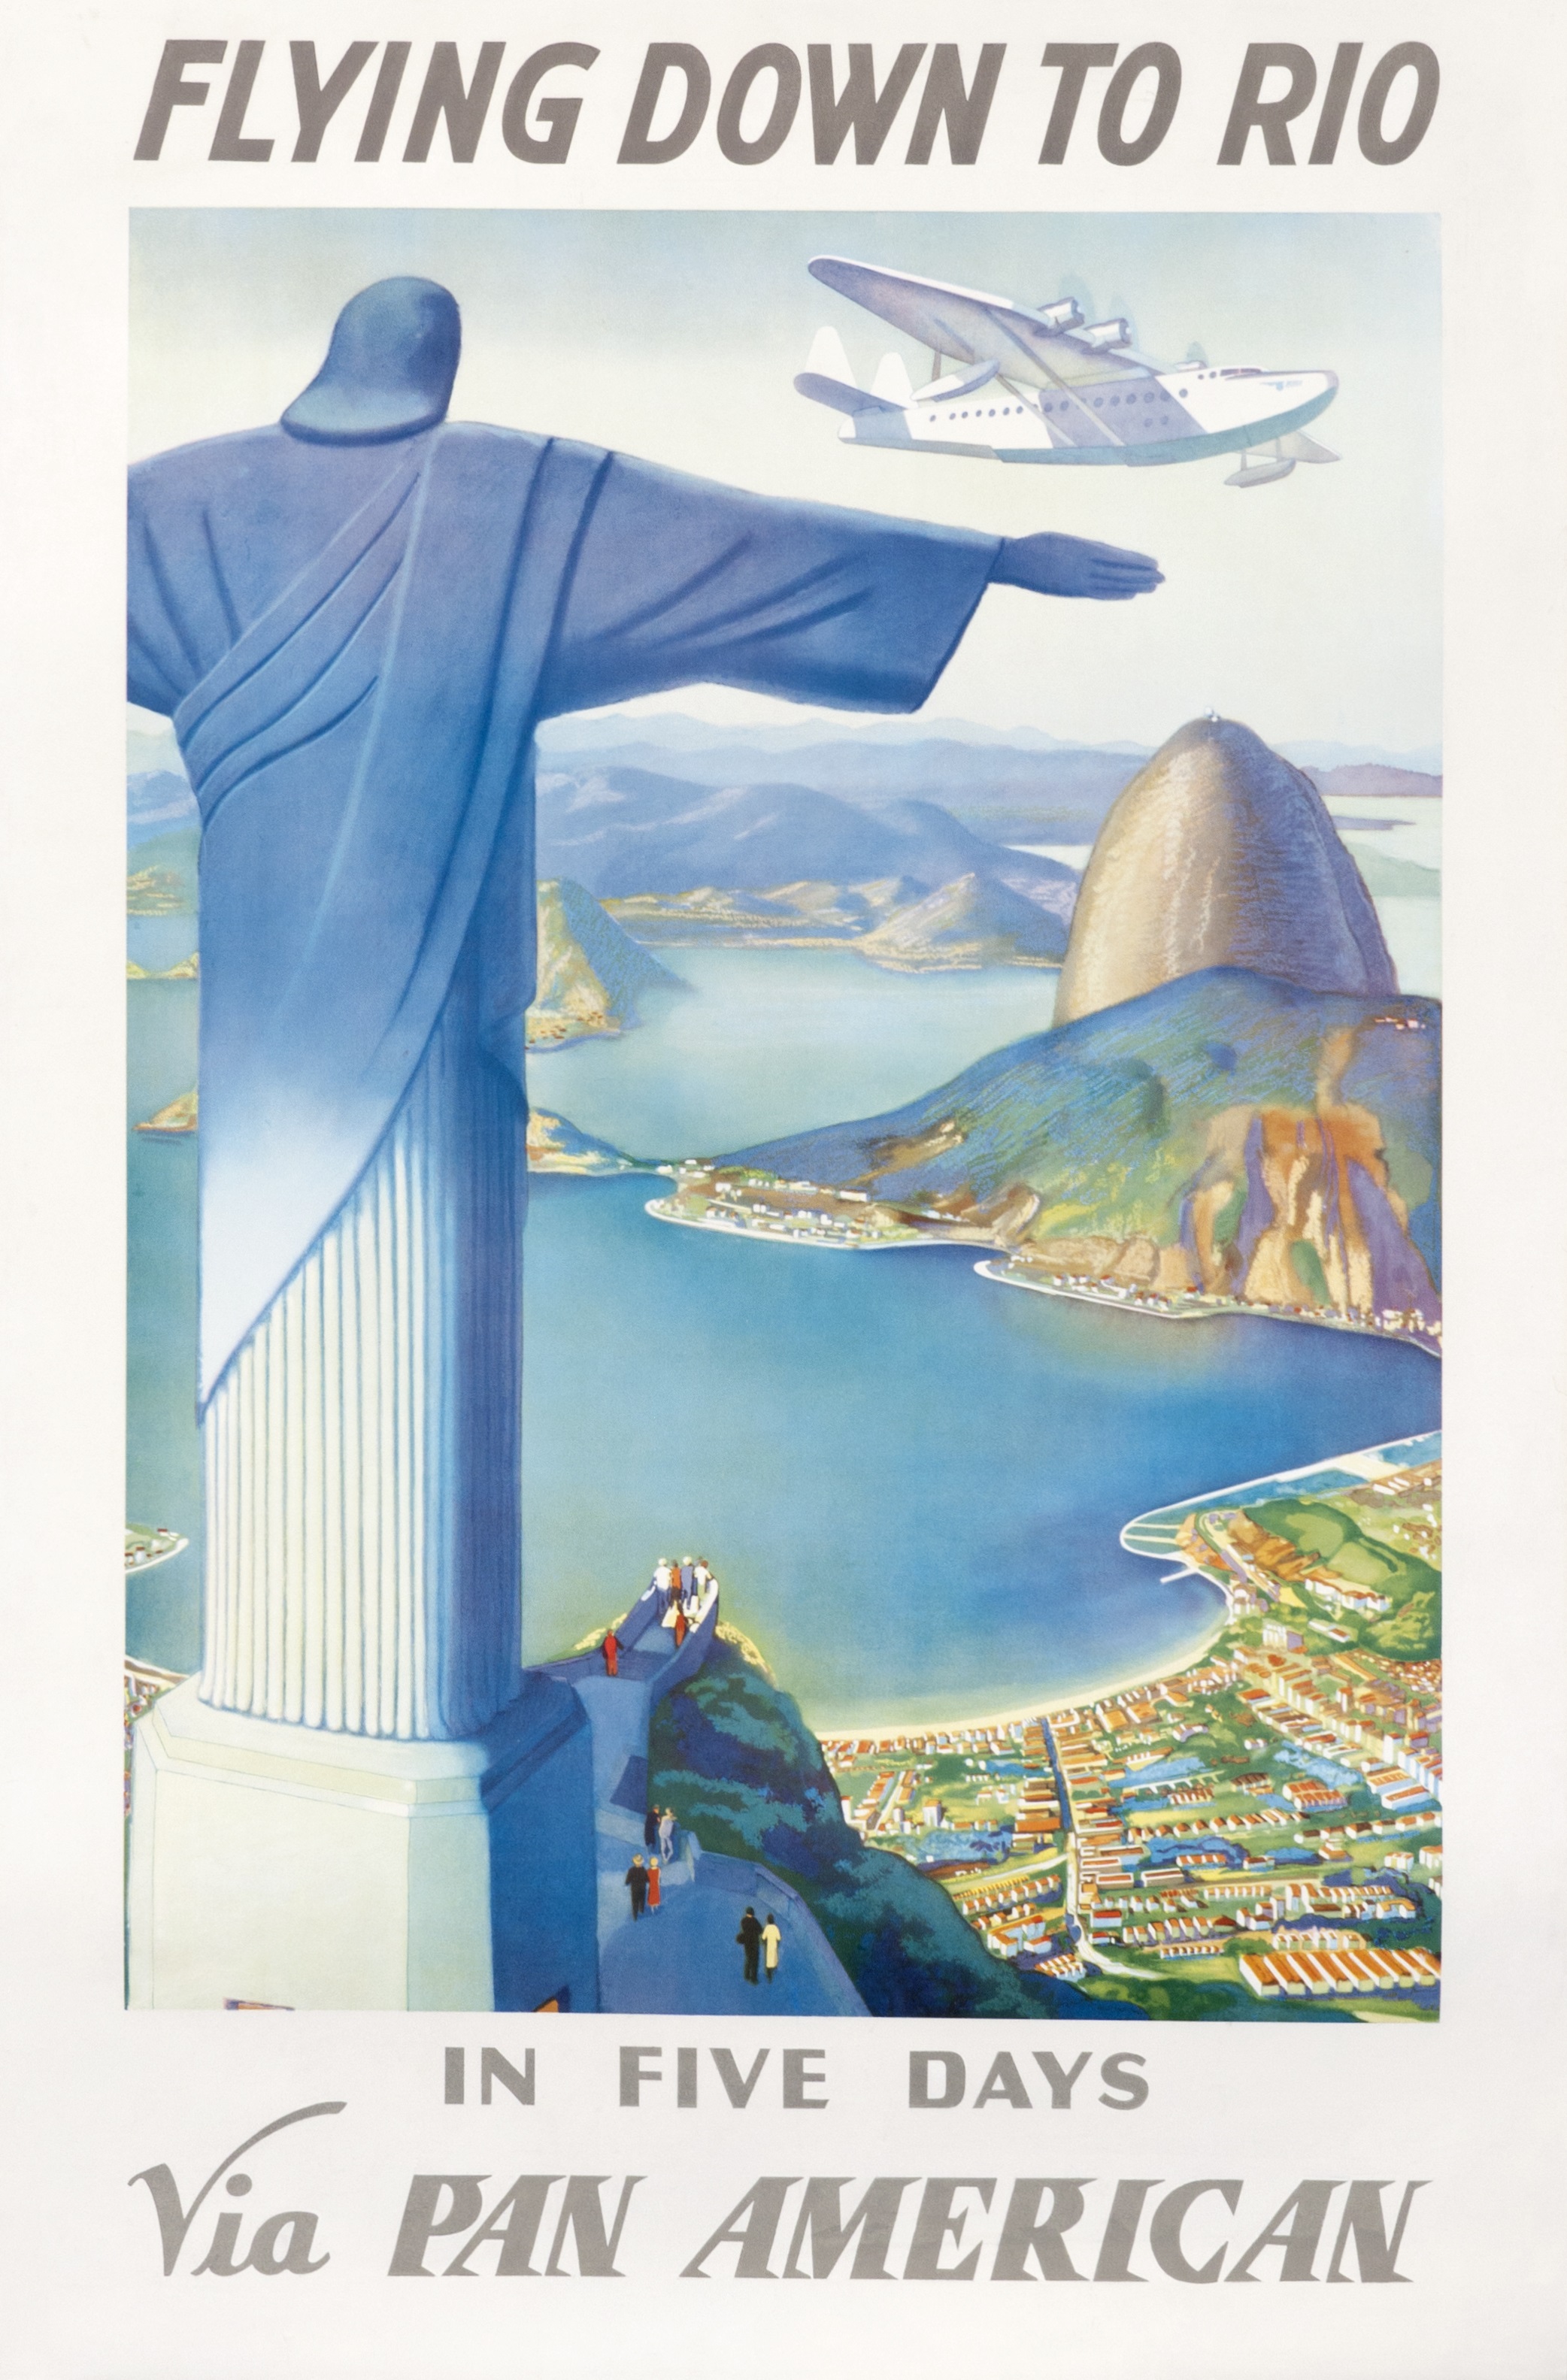 Flying Down to Rio in Five Days via Pan American, PG Lawler, c. 1939